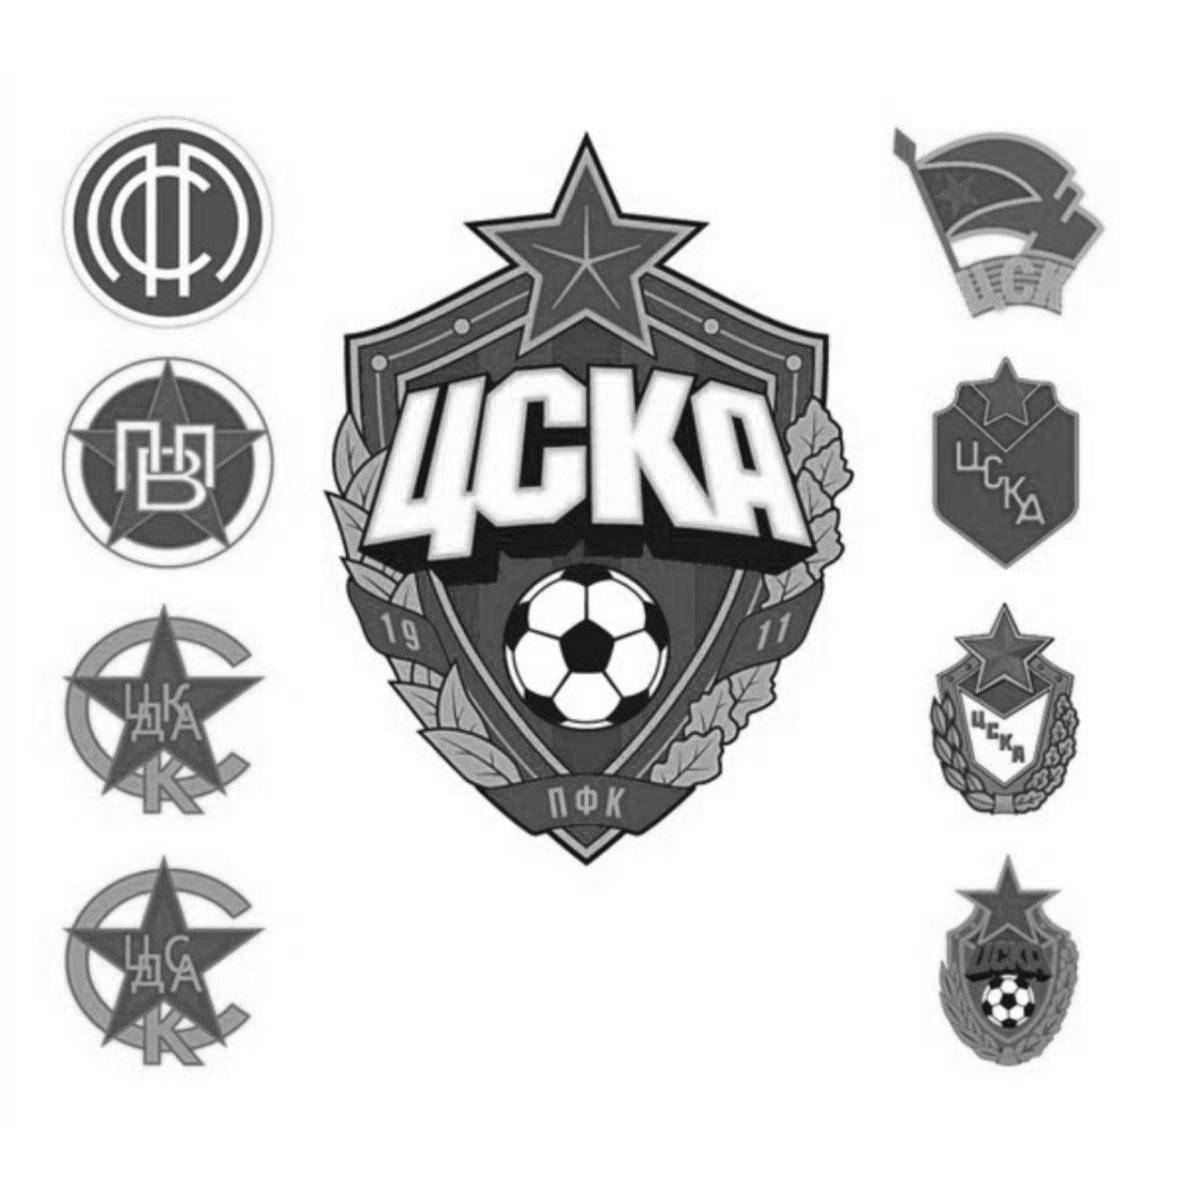 Coloring page wonderful CSKA emblem